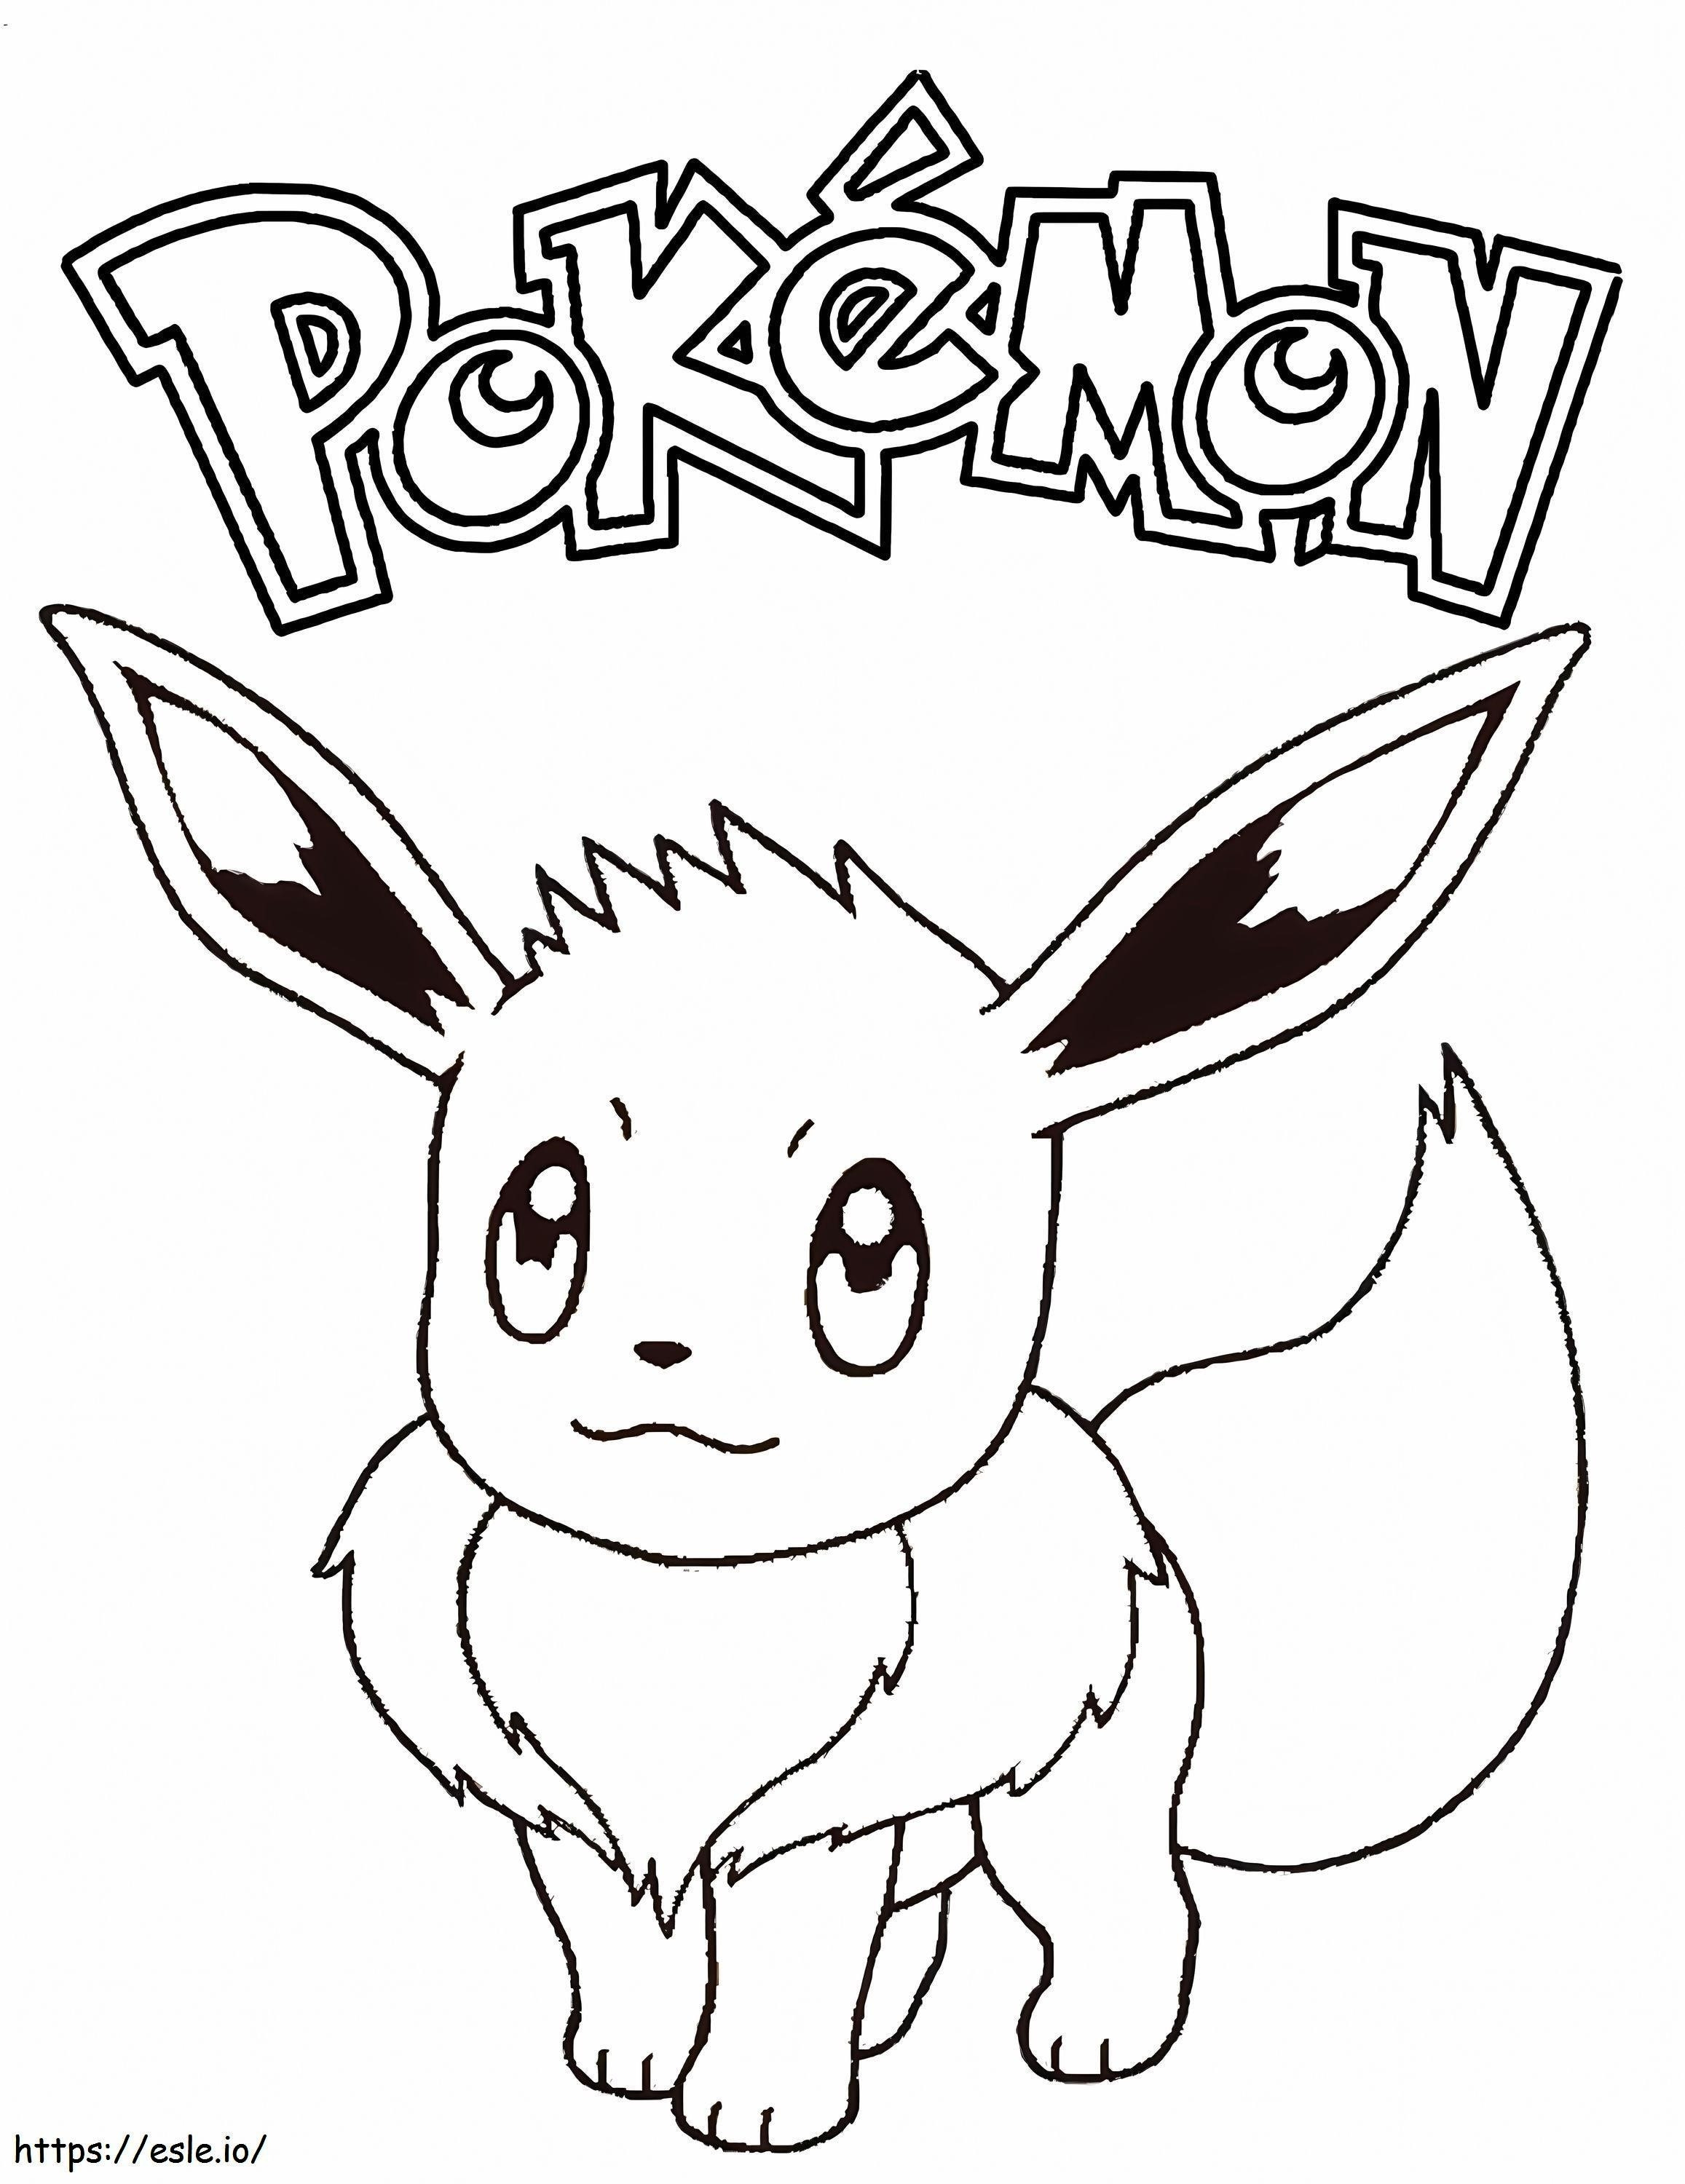 Coloriage Pokémon Évoli à imprimer dessin